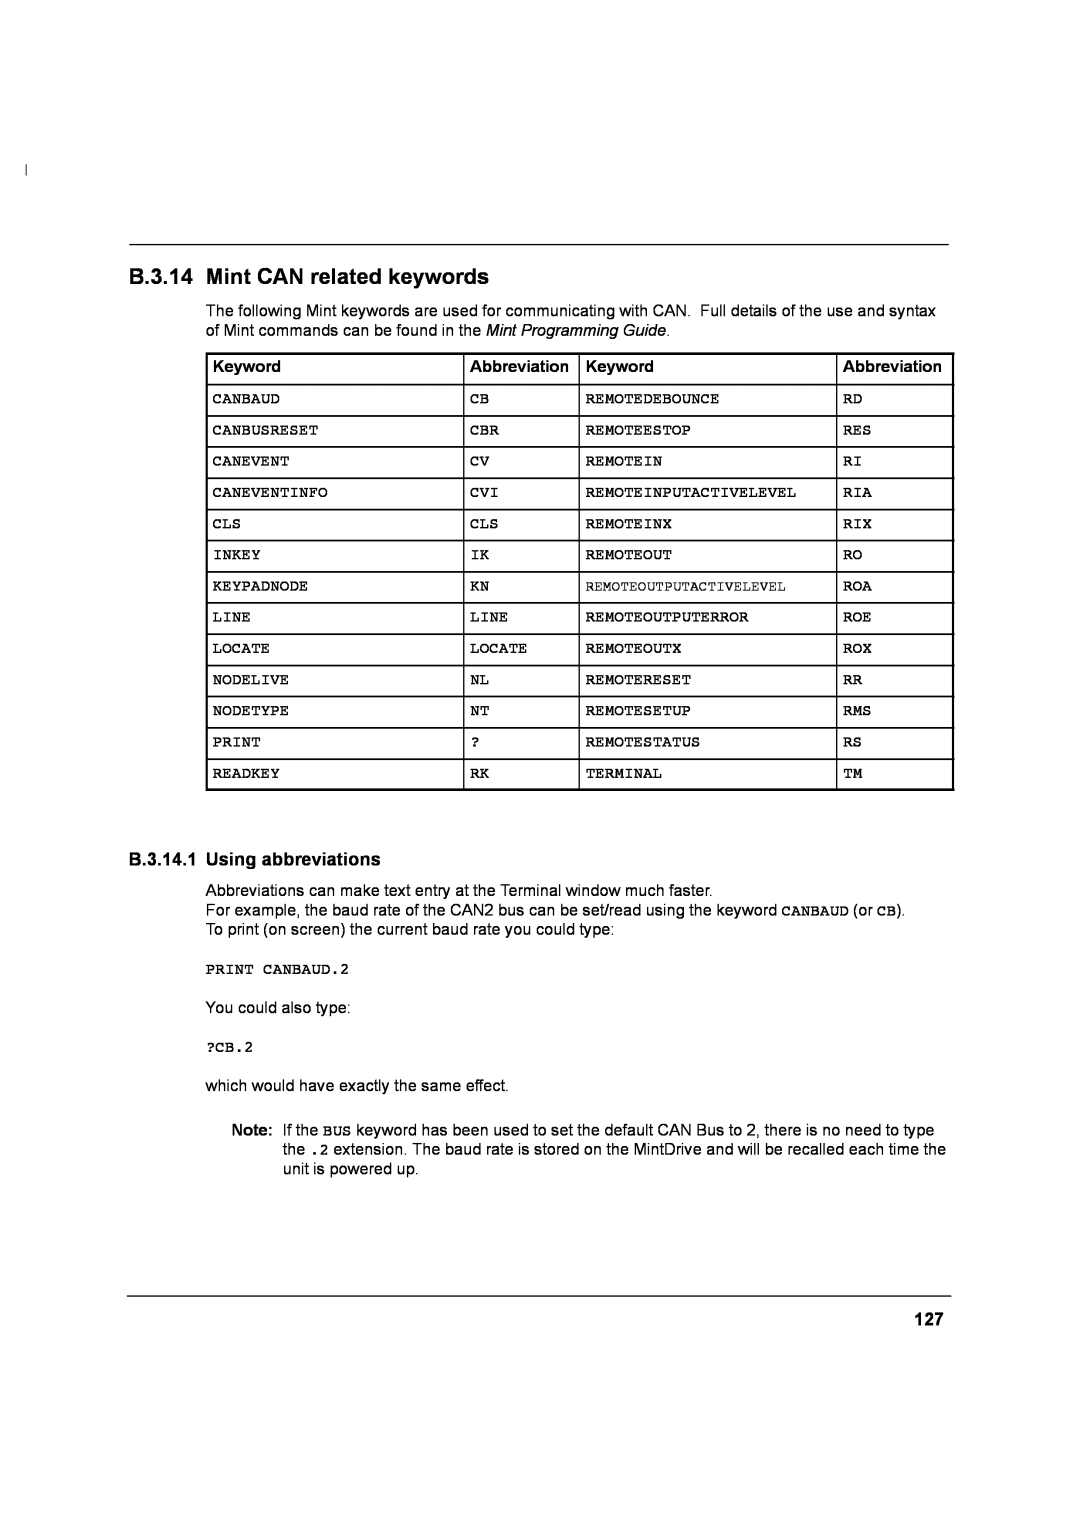 Baldor MN1274 06/2001 installation manual B.3.14 Mint CAN related keywords, B.3.14.1 Using abbreviations 